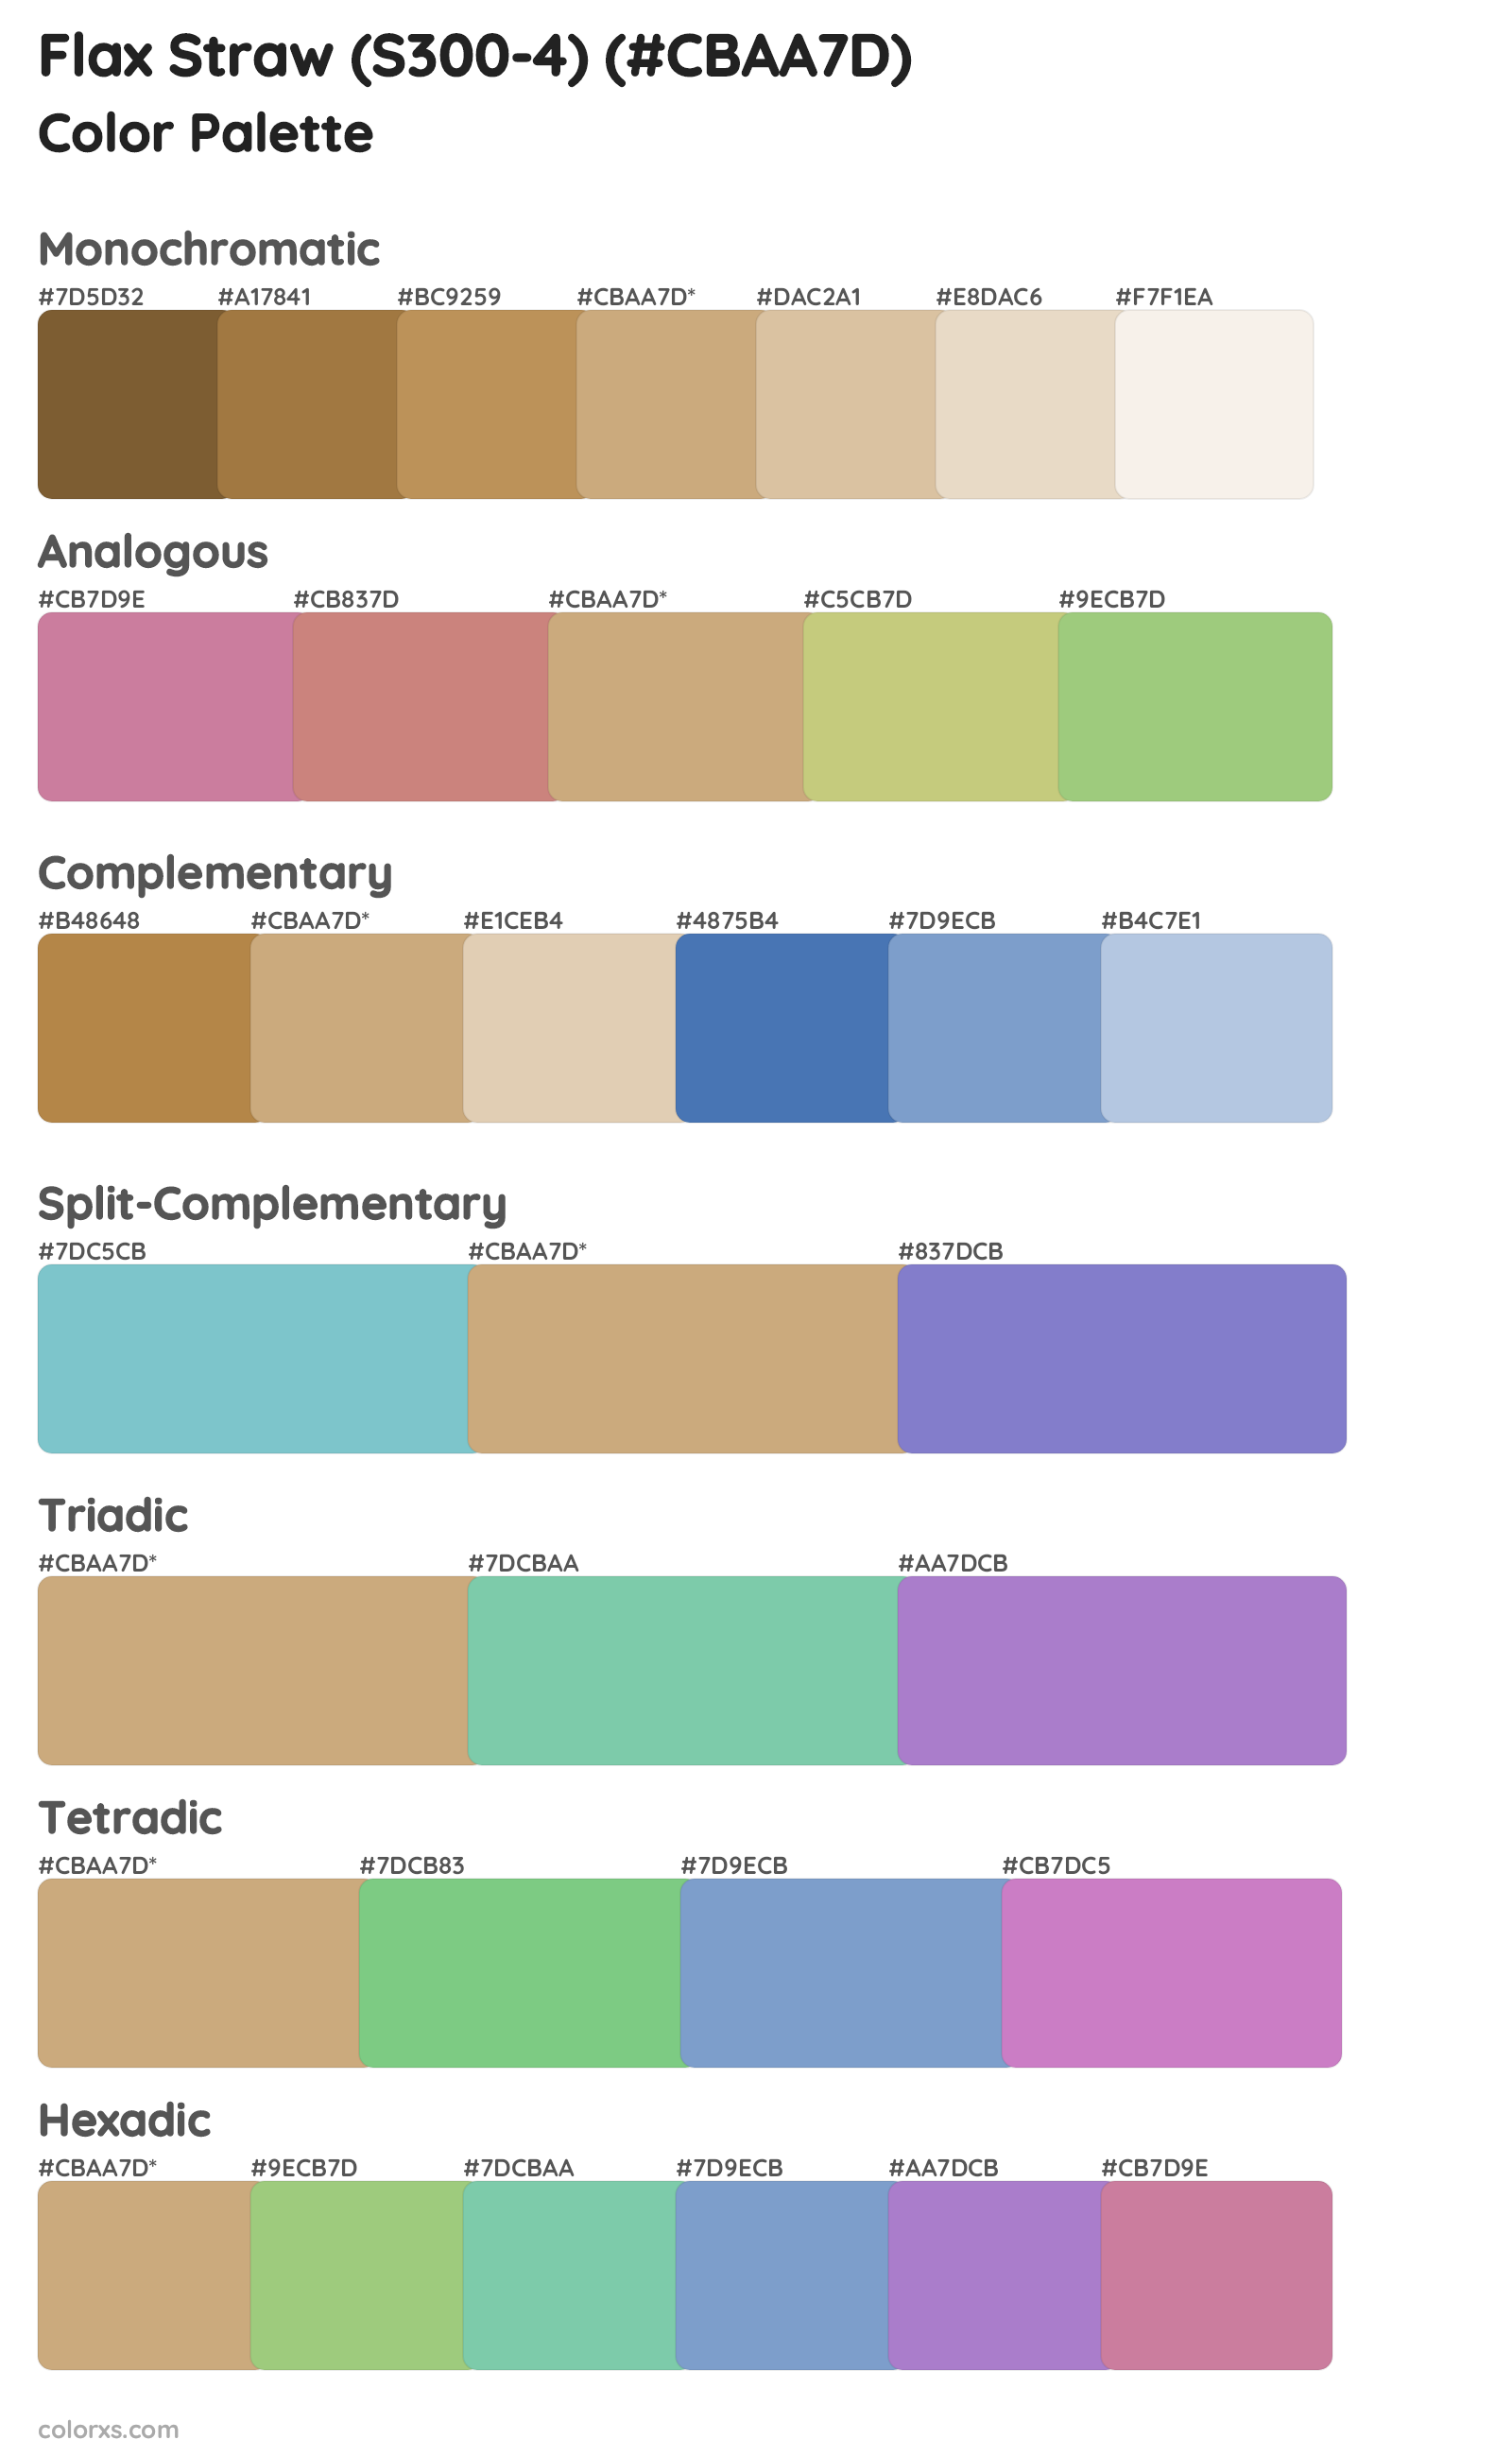 Flax Straw (S300-4) Color Scheme Palettes